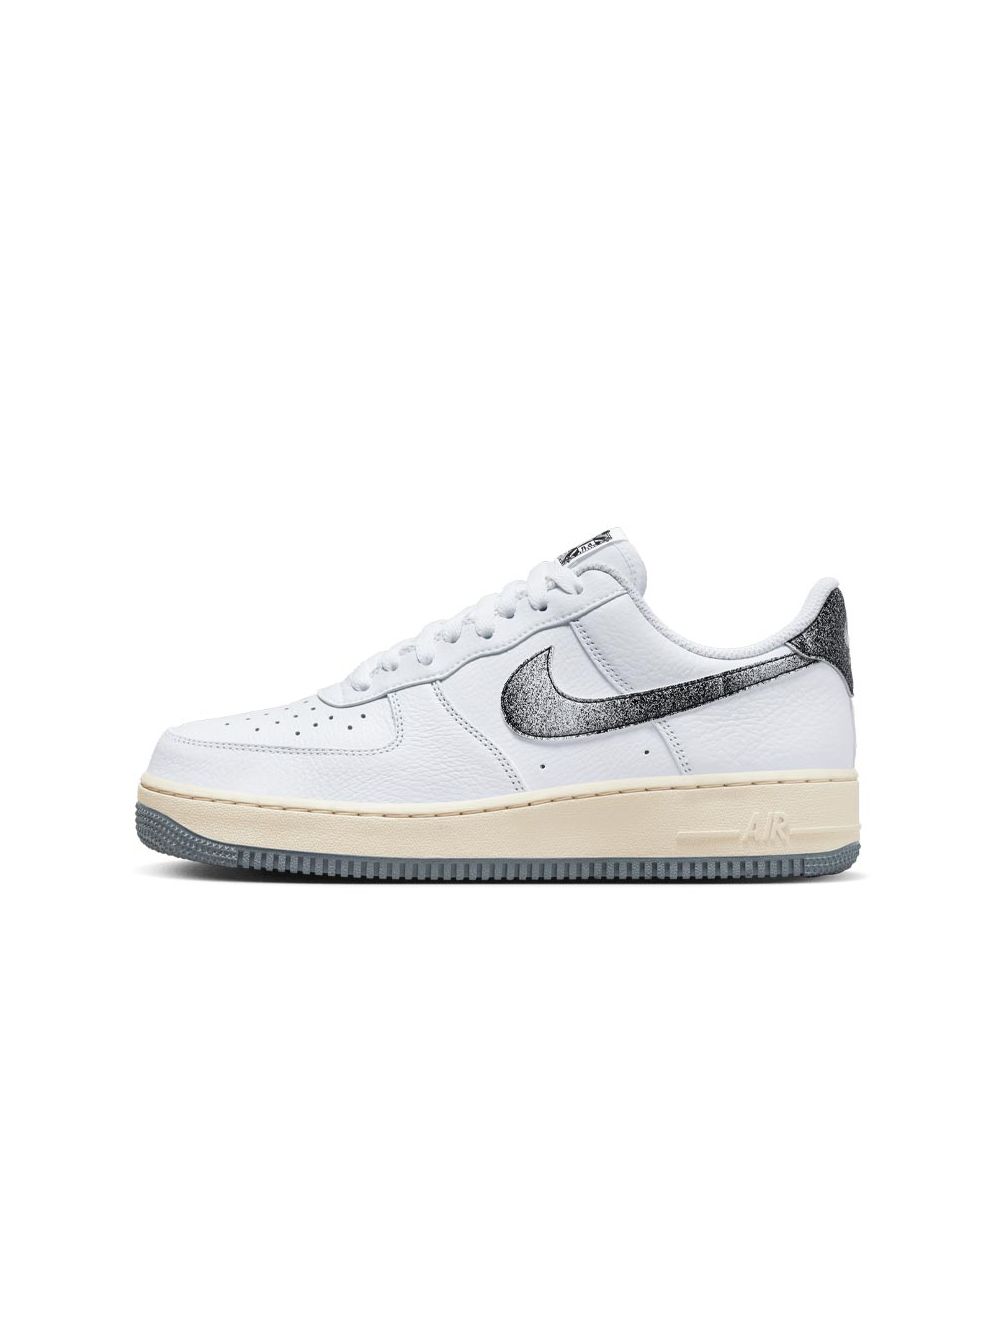 Shop Nike Air Force 1 ’07 Sneaker Mens White and Smoke Grey | Stu